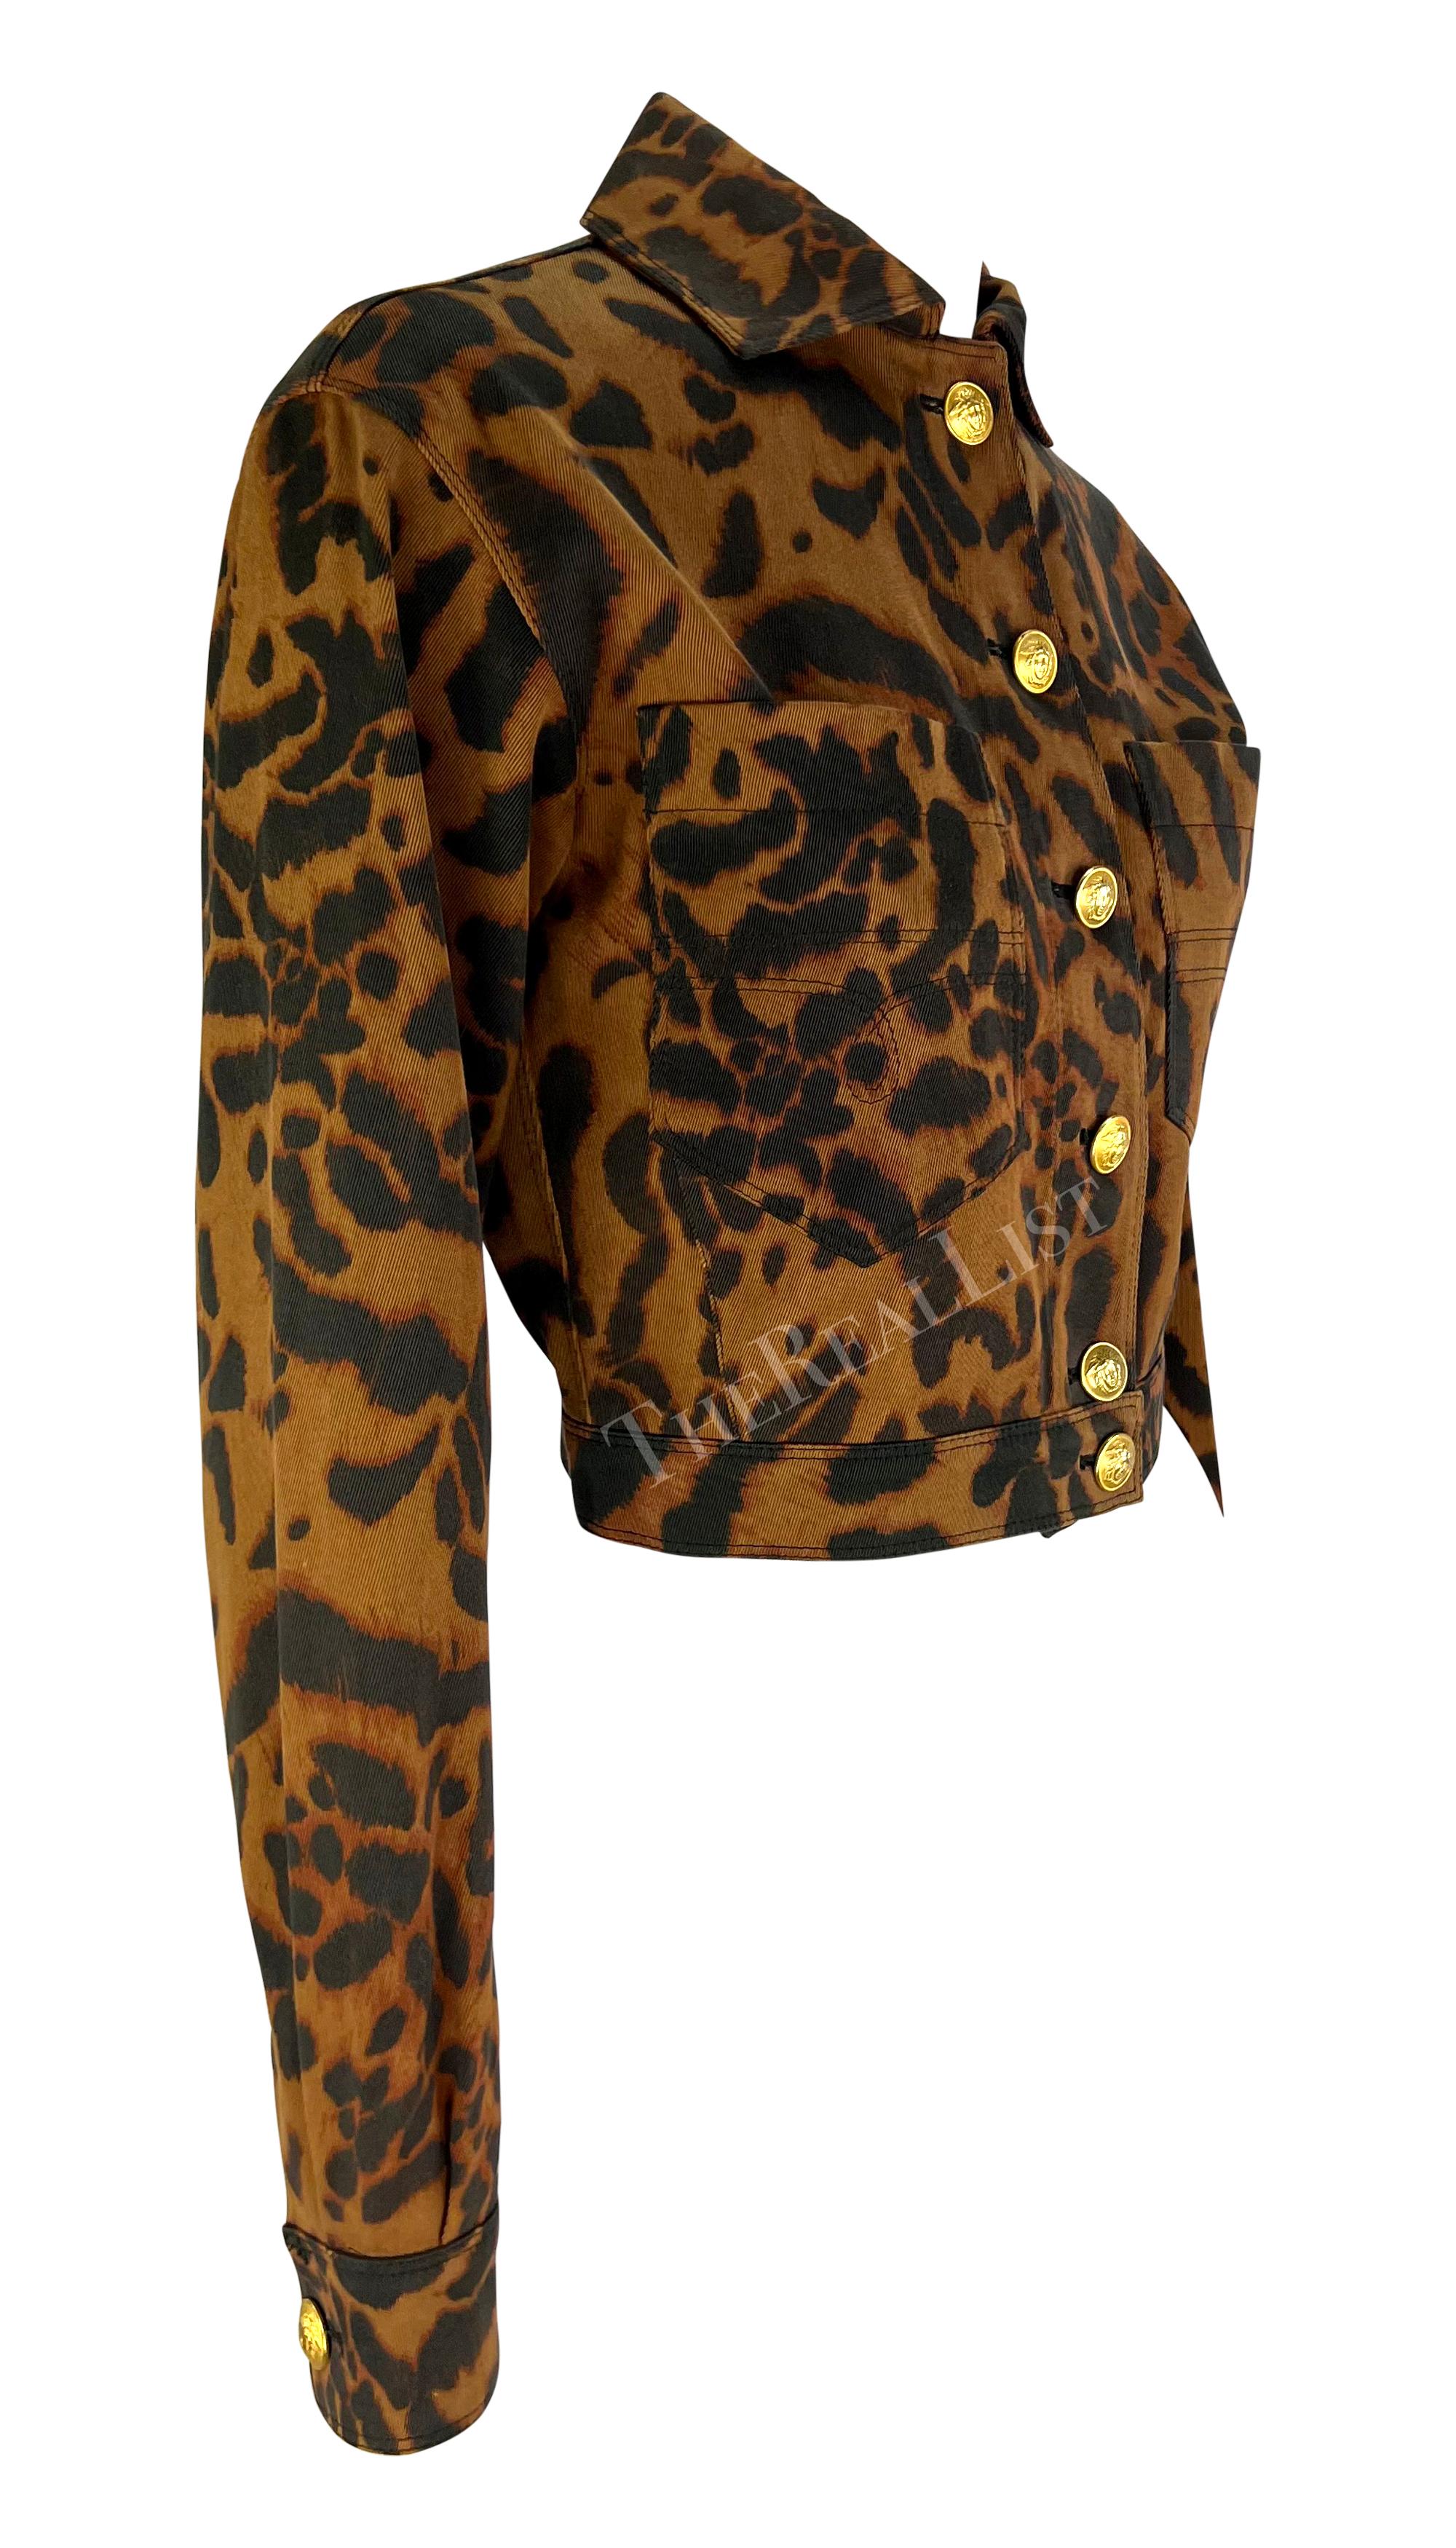 S/S 1992 Gianni Versace Runway Brown Cheetah Print Denim Medusa Cropped Jacket For Sale 7